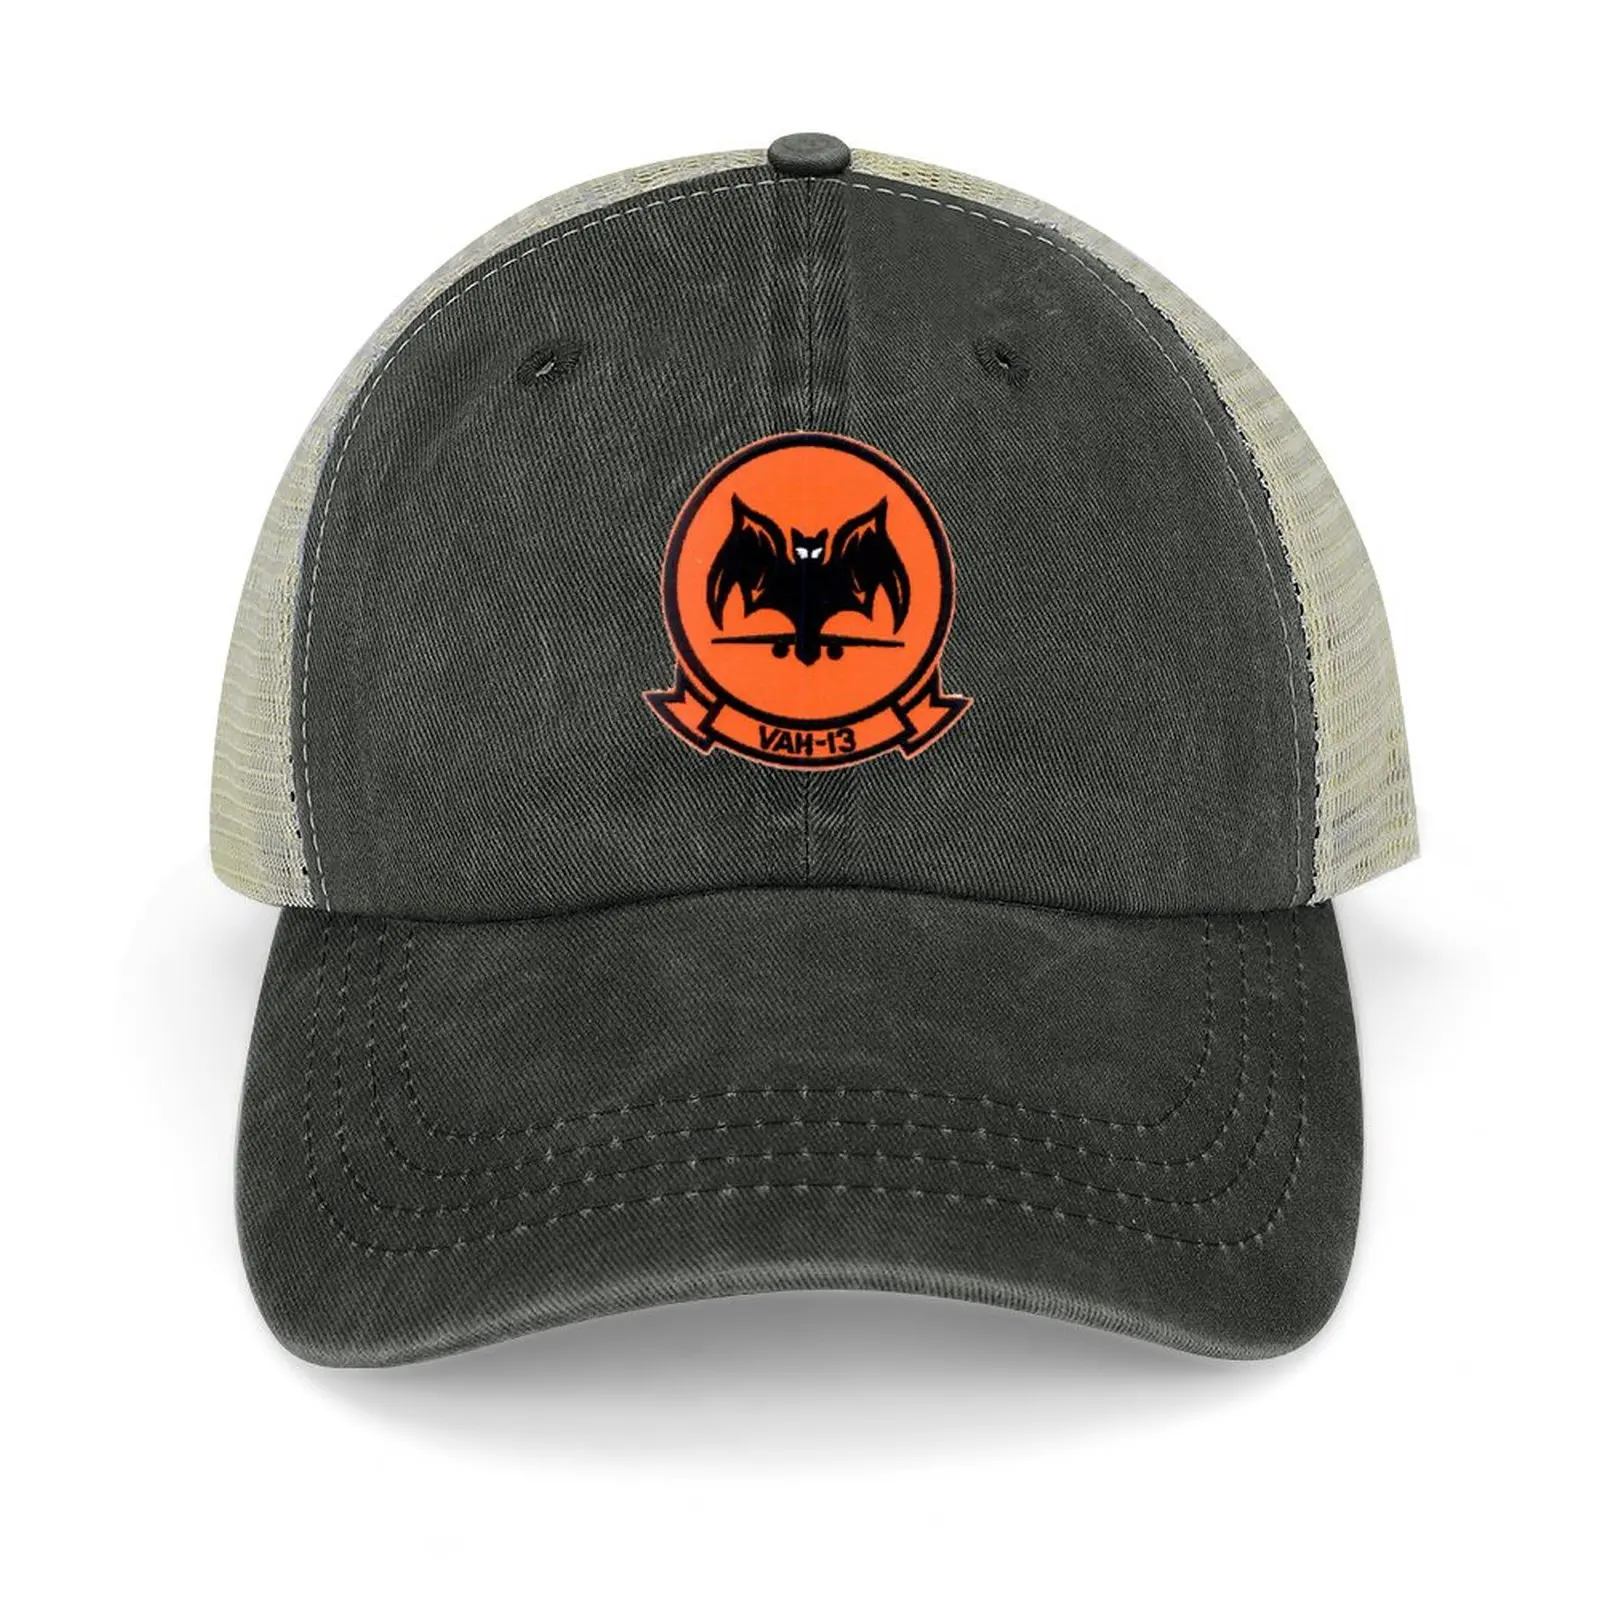 

VAH-13 HEAVY ATTACK SQUADRON STORE Cowboy Hat Bobble Hat Horse Hat Custom Cap tea Men Women's